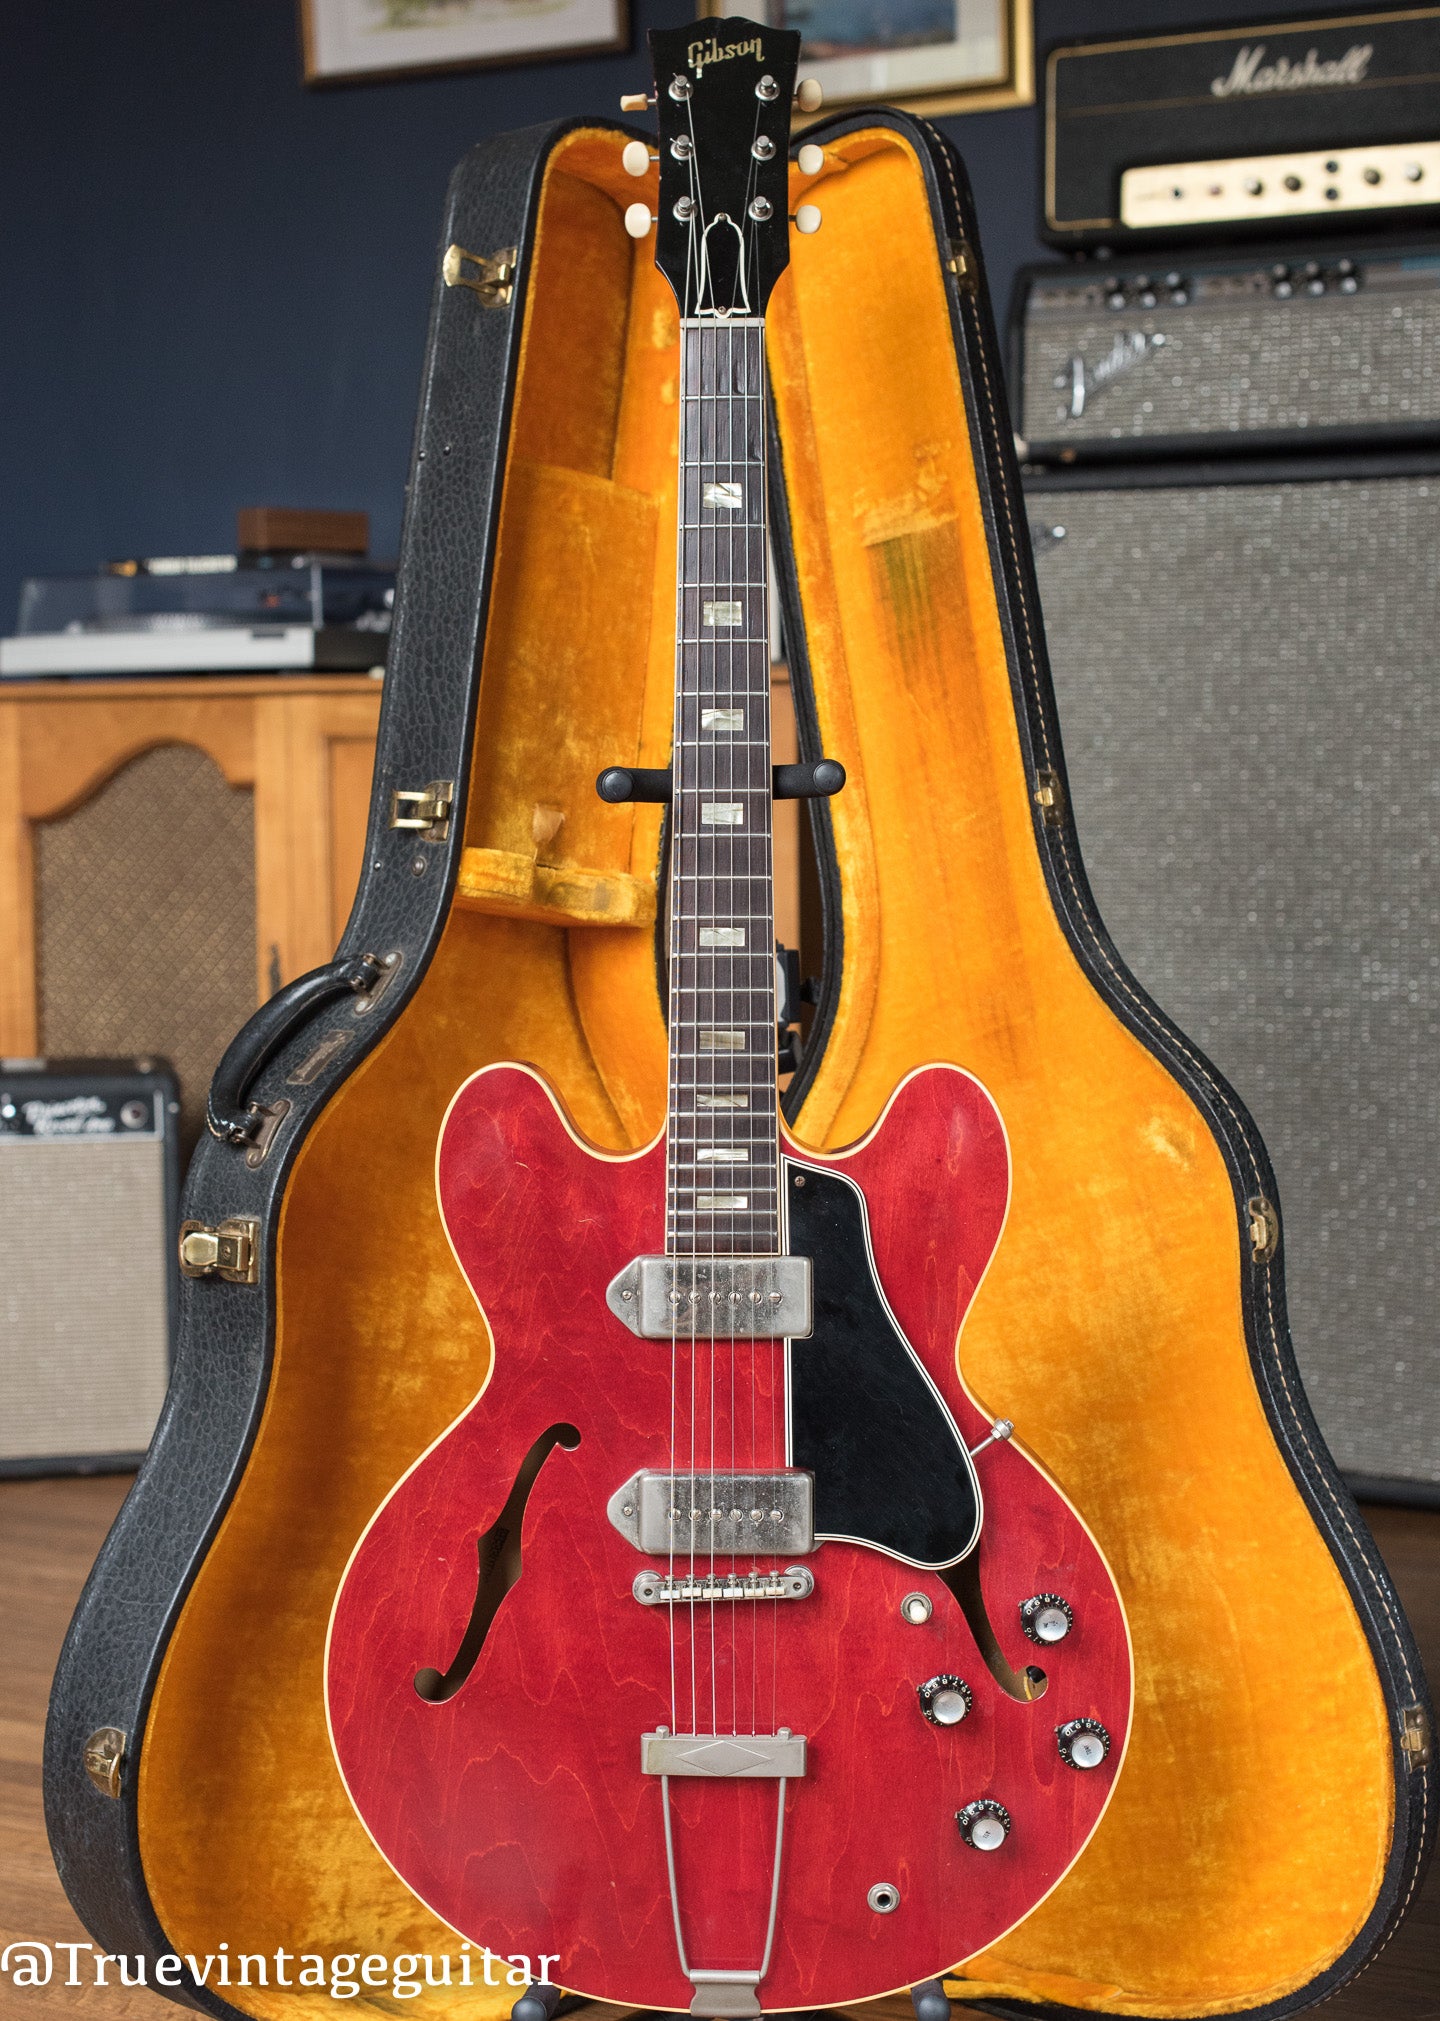 Vintage 1963 Gibson ES-330 guitar